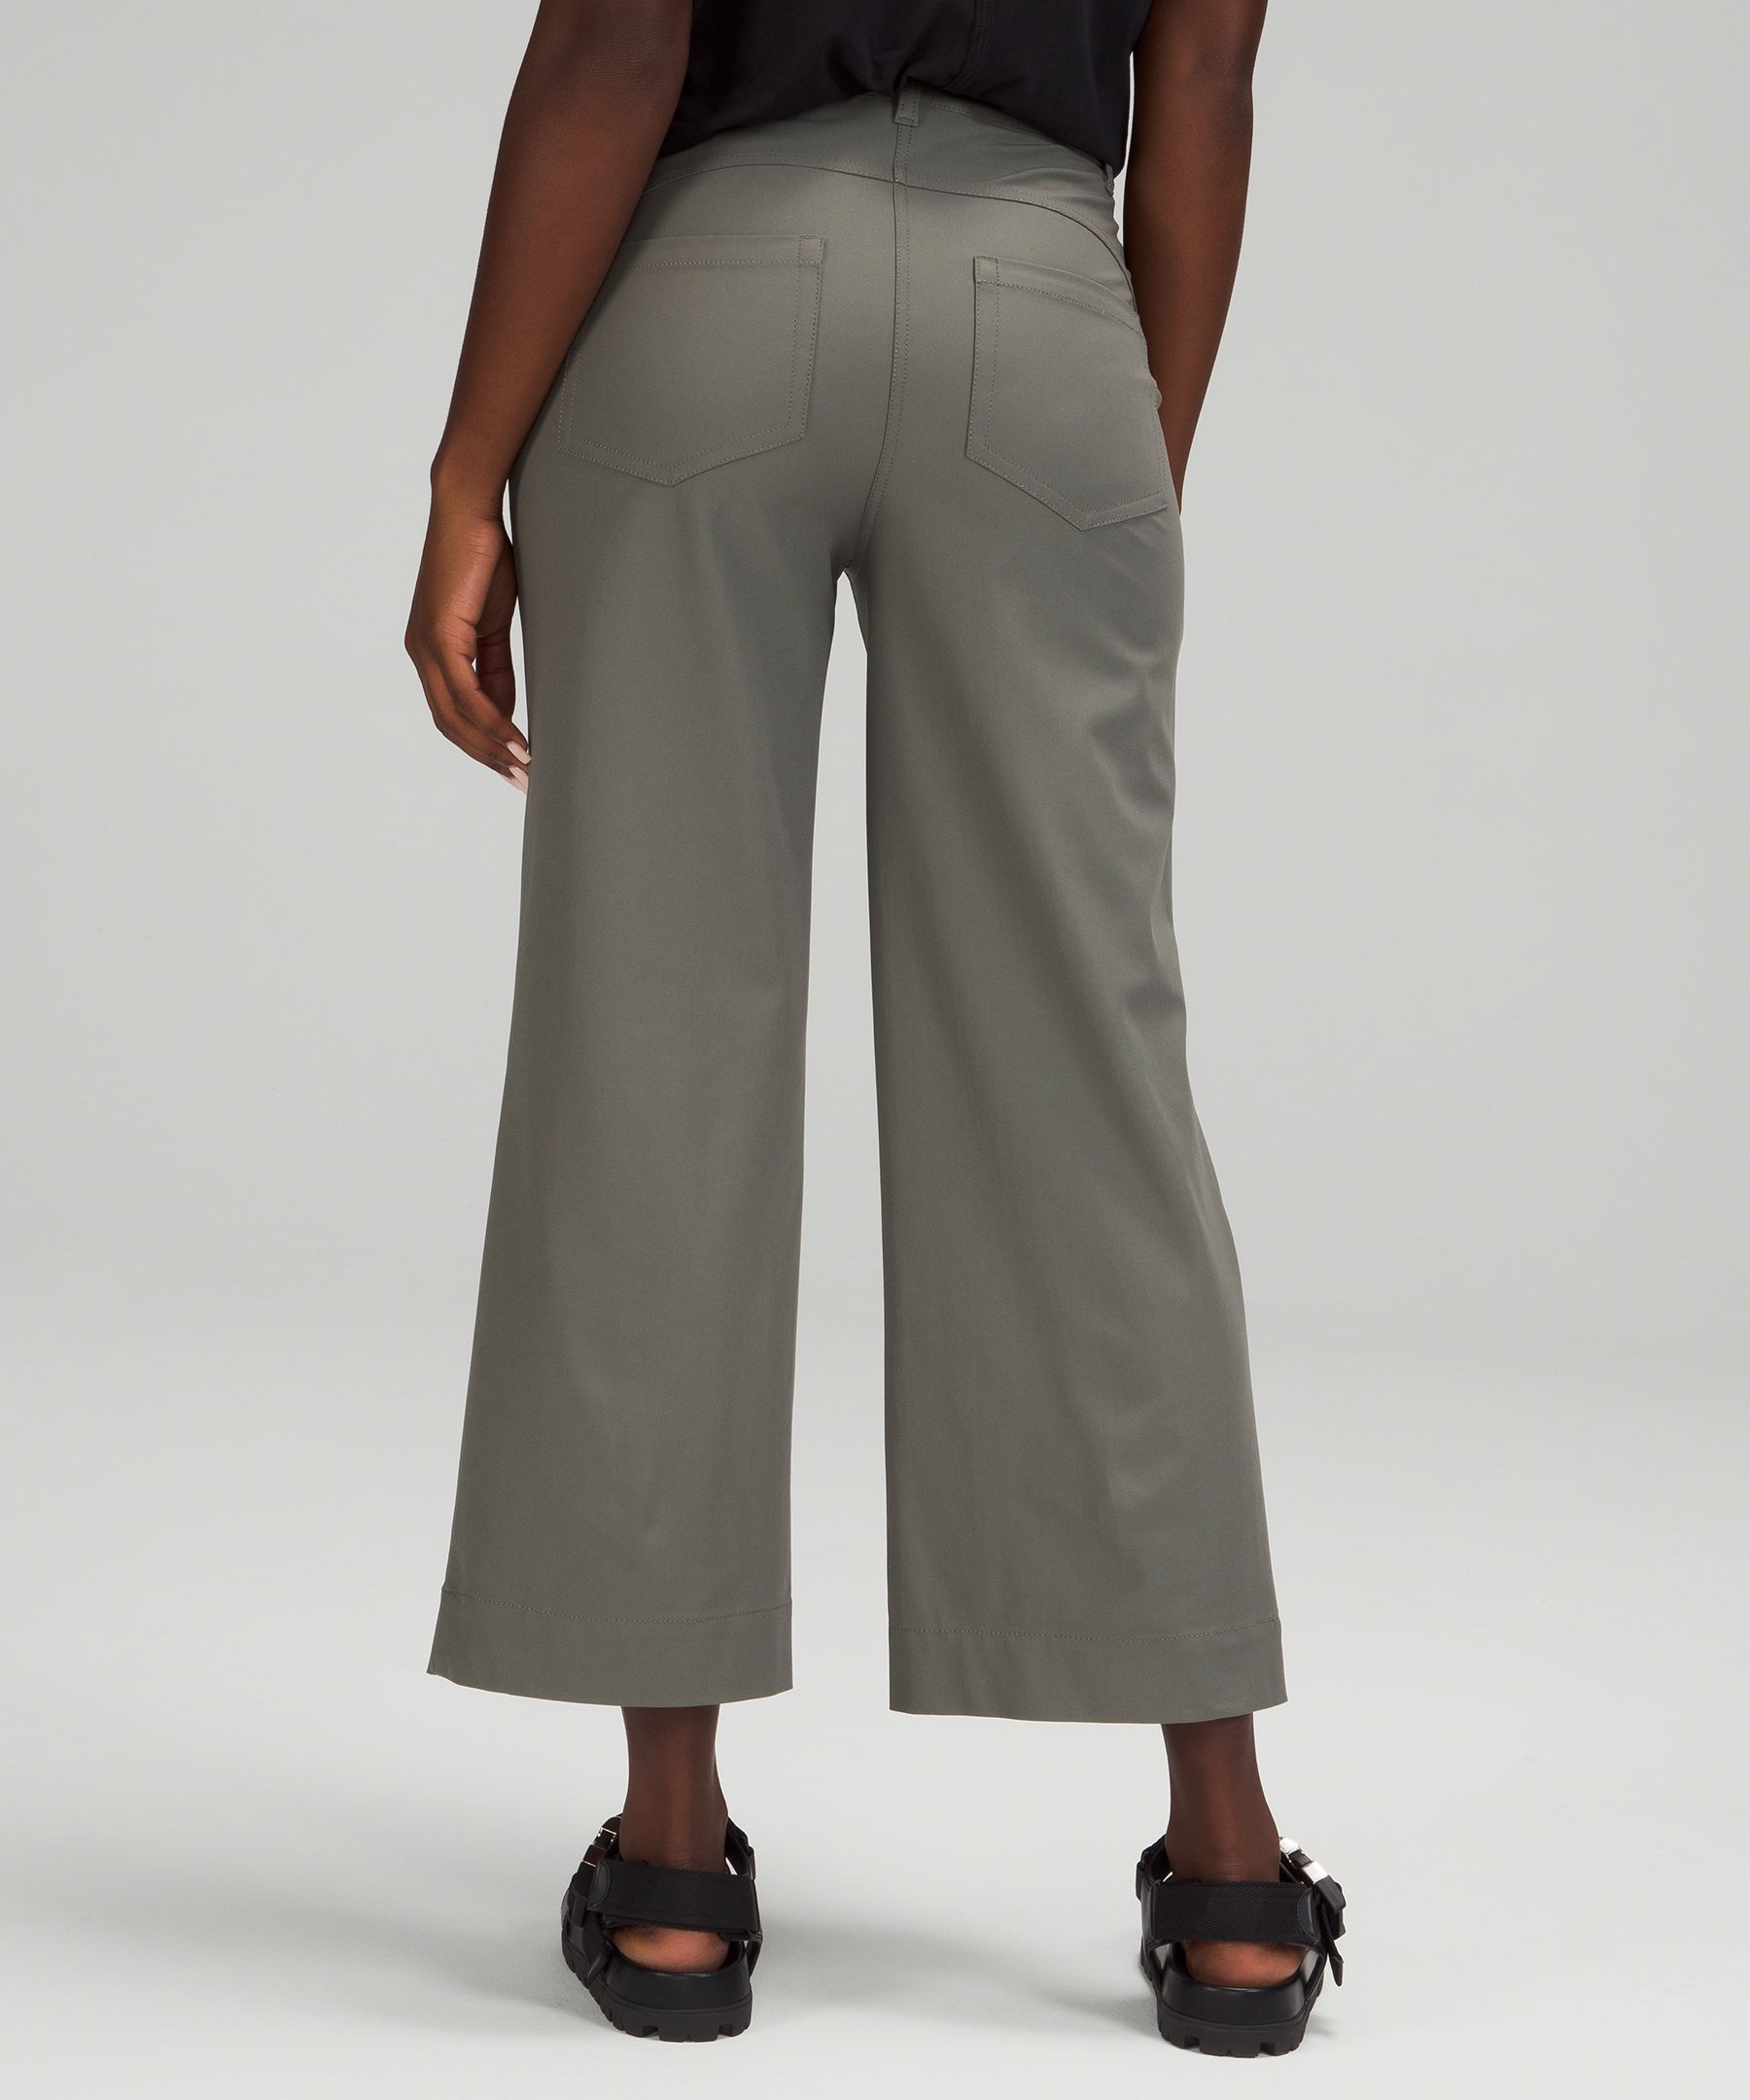 Lululemon City Sleek 5 Pocket Wide-Leg High Rise 7/8 Length Pants